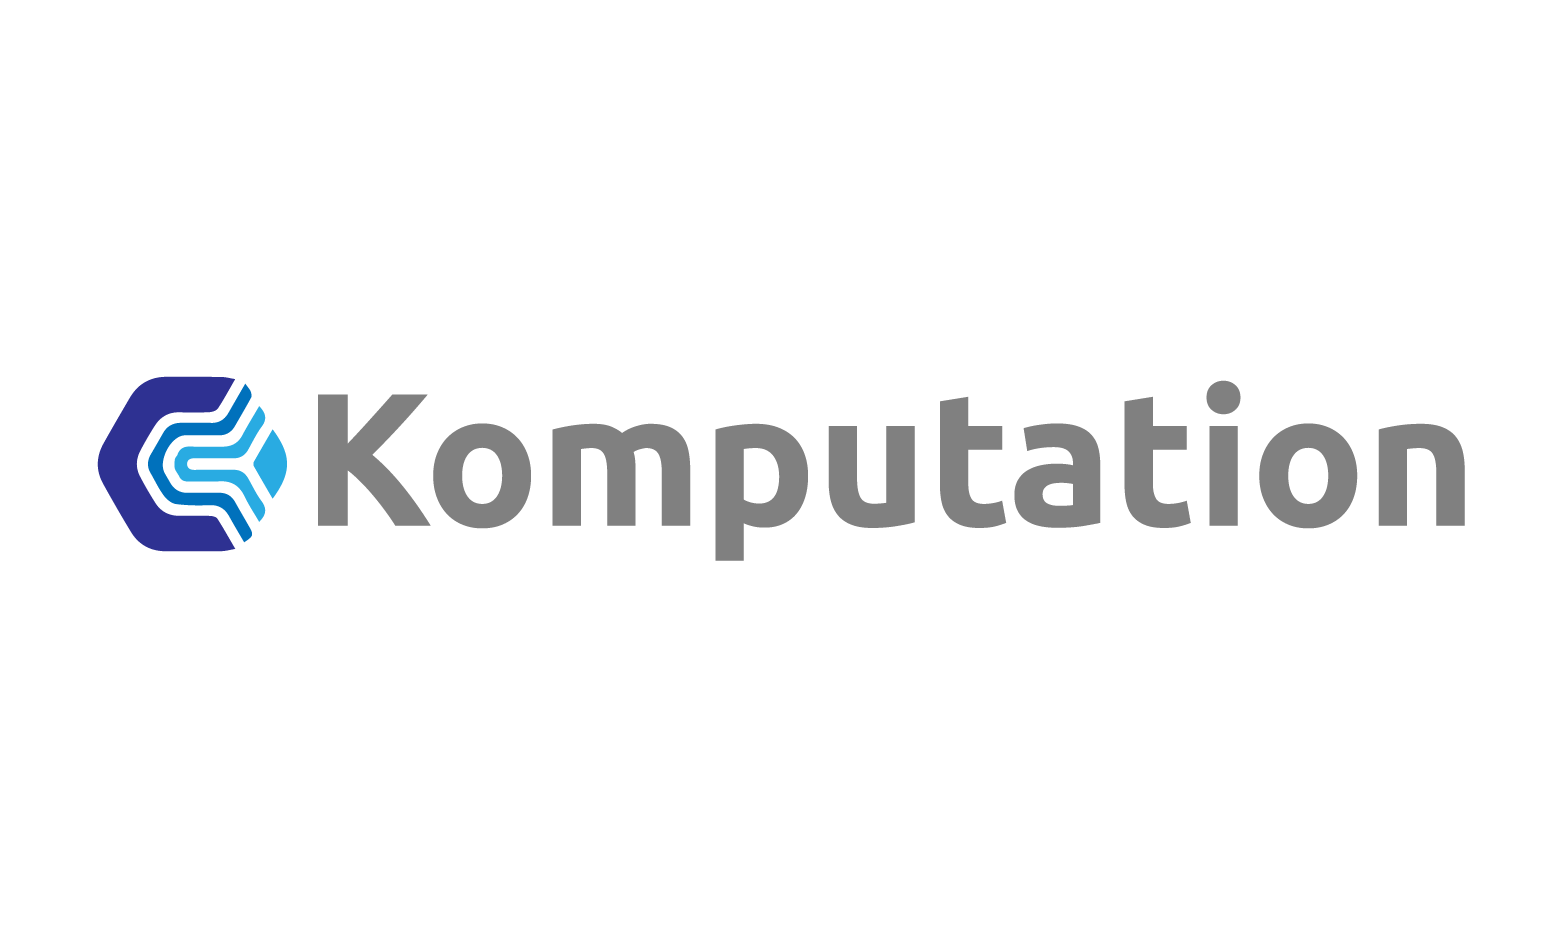 Komputation.com - Creative brandable domain for sale